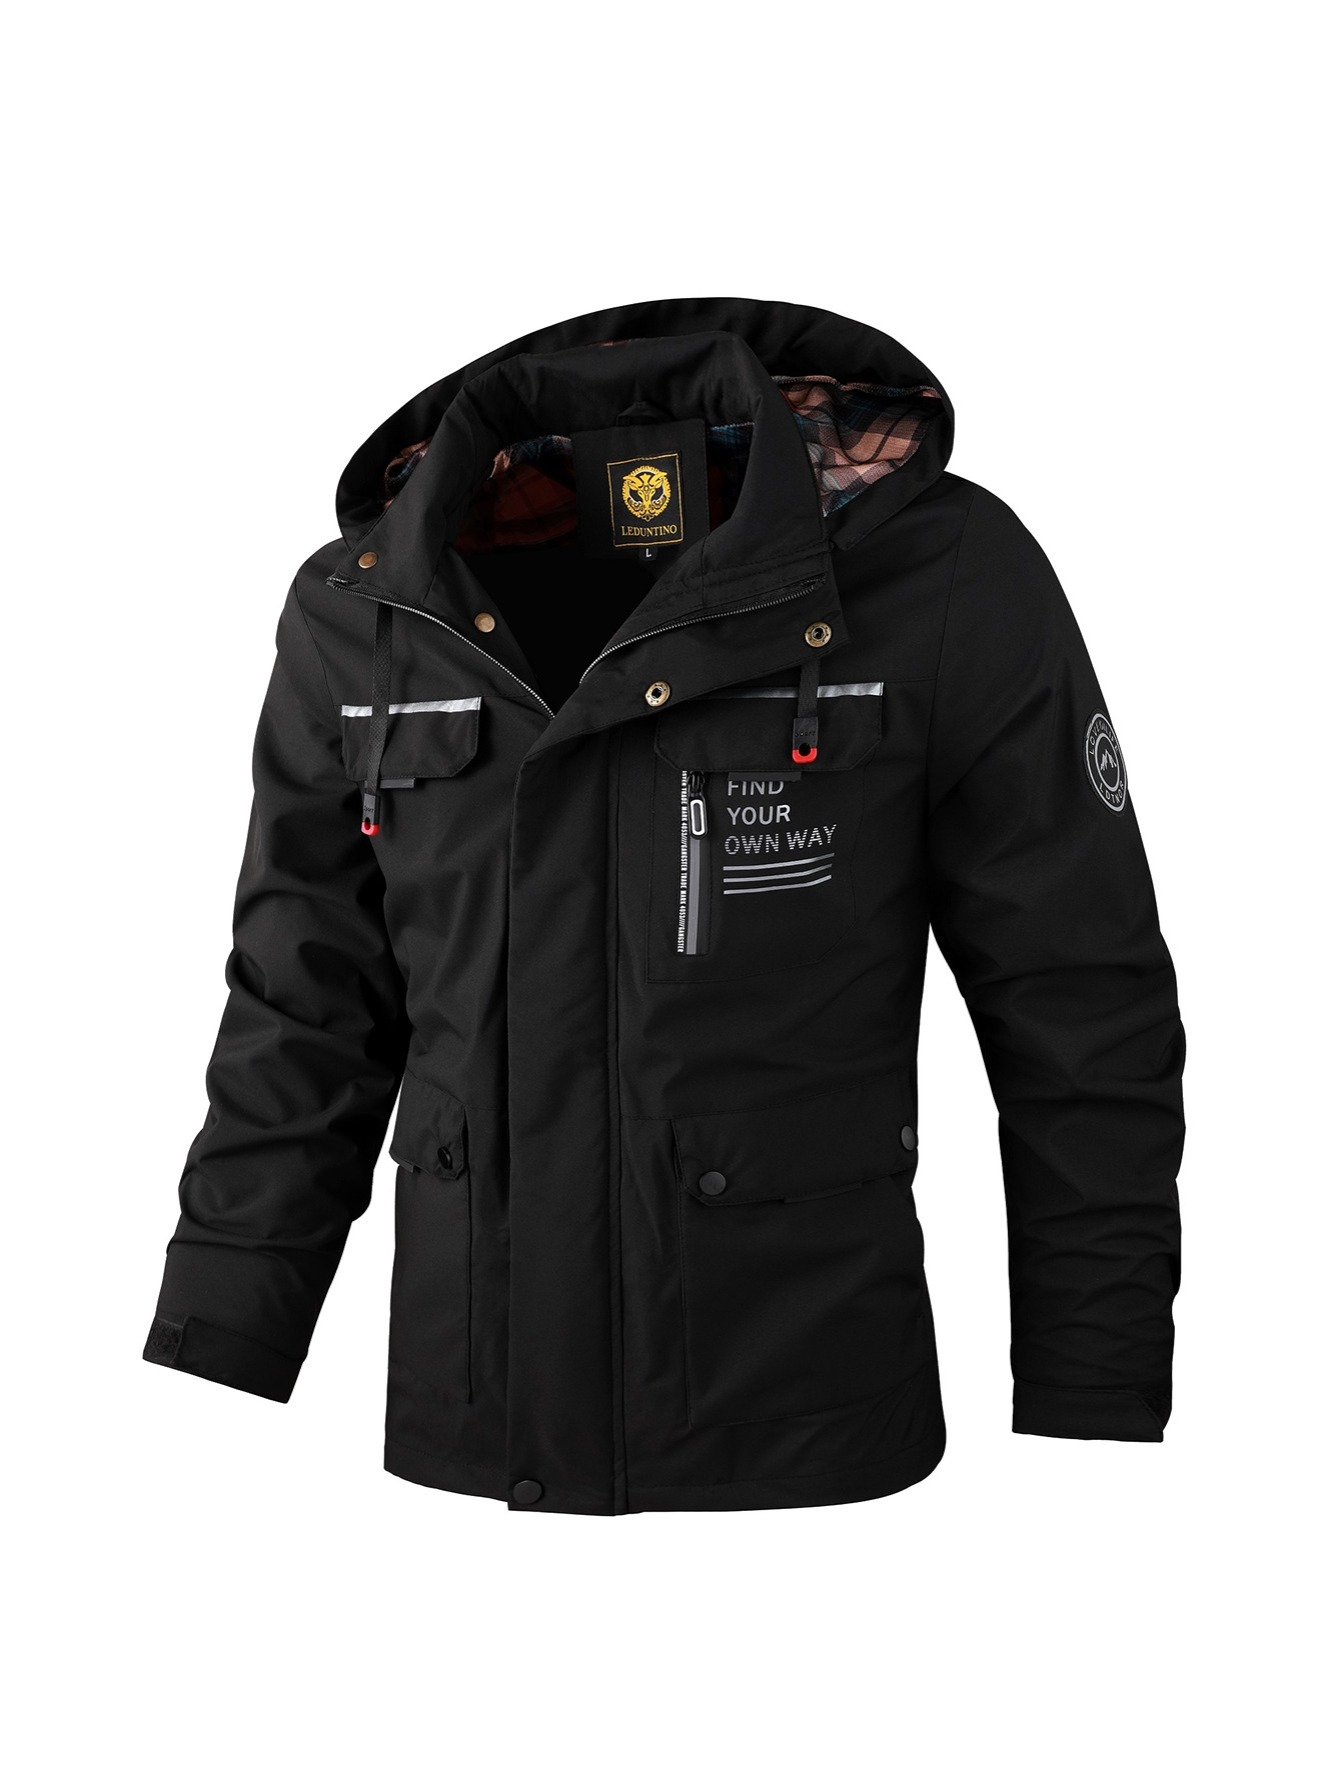 Simplmasygenix Clearance Men's Sleeveless Jacket Casual Coat Thin